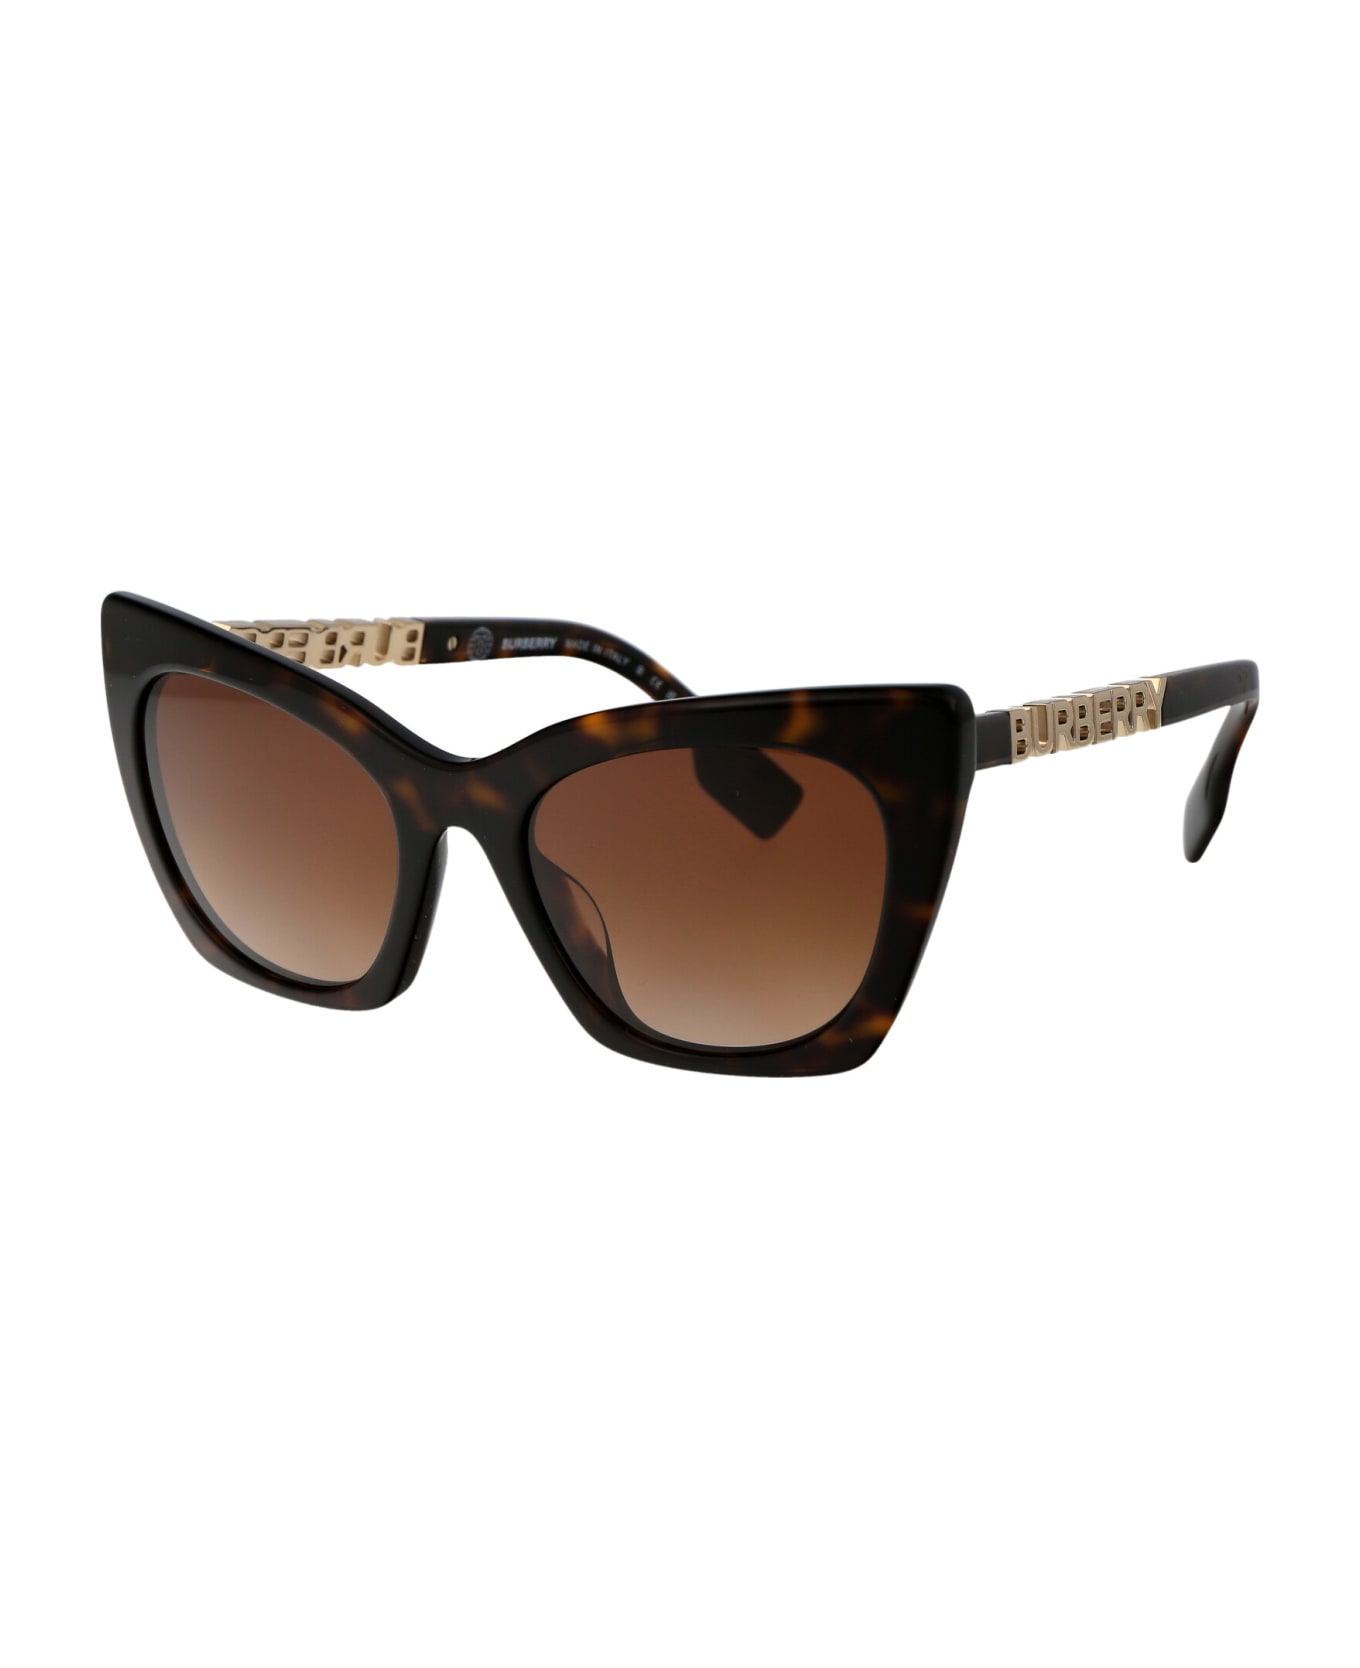 Burberry Eyewear Marianne Sunglasses - 300213 DARK HAVANA